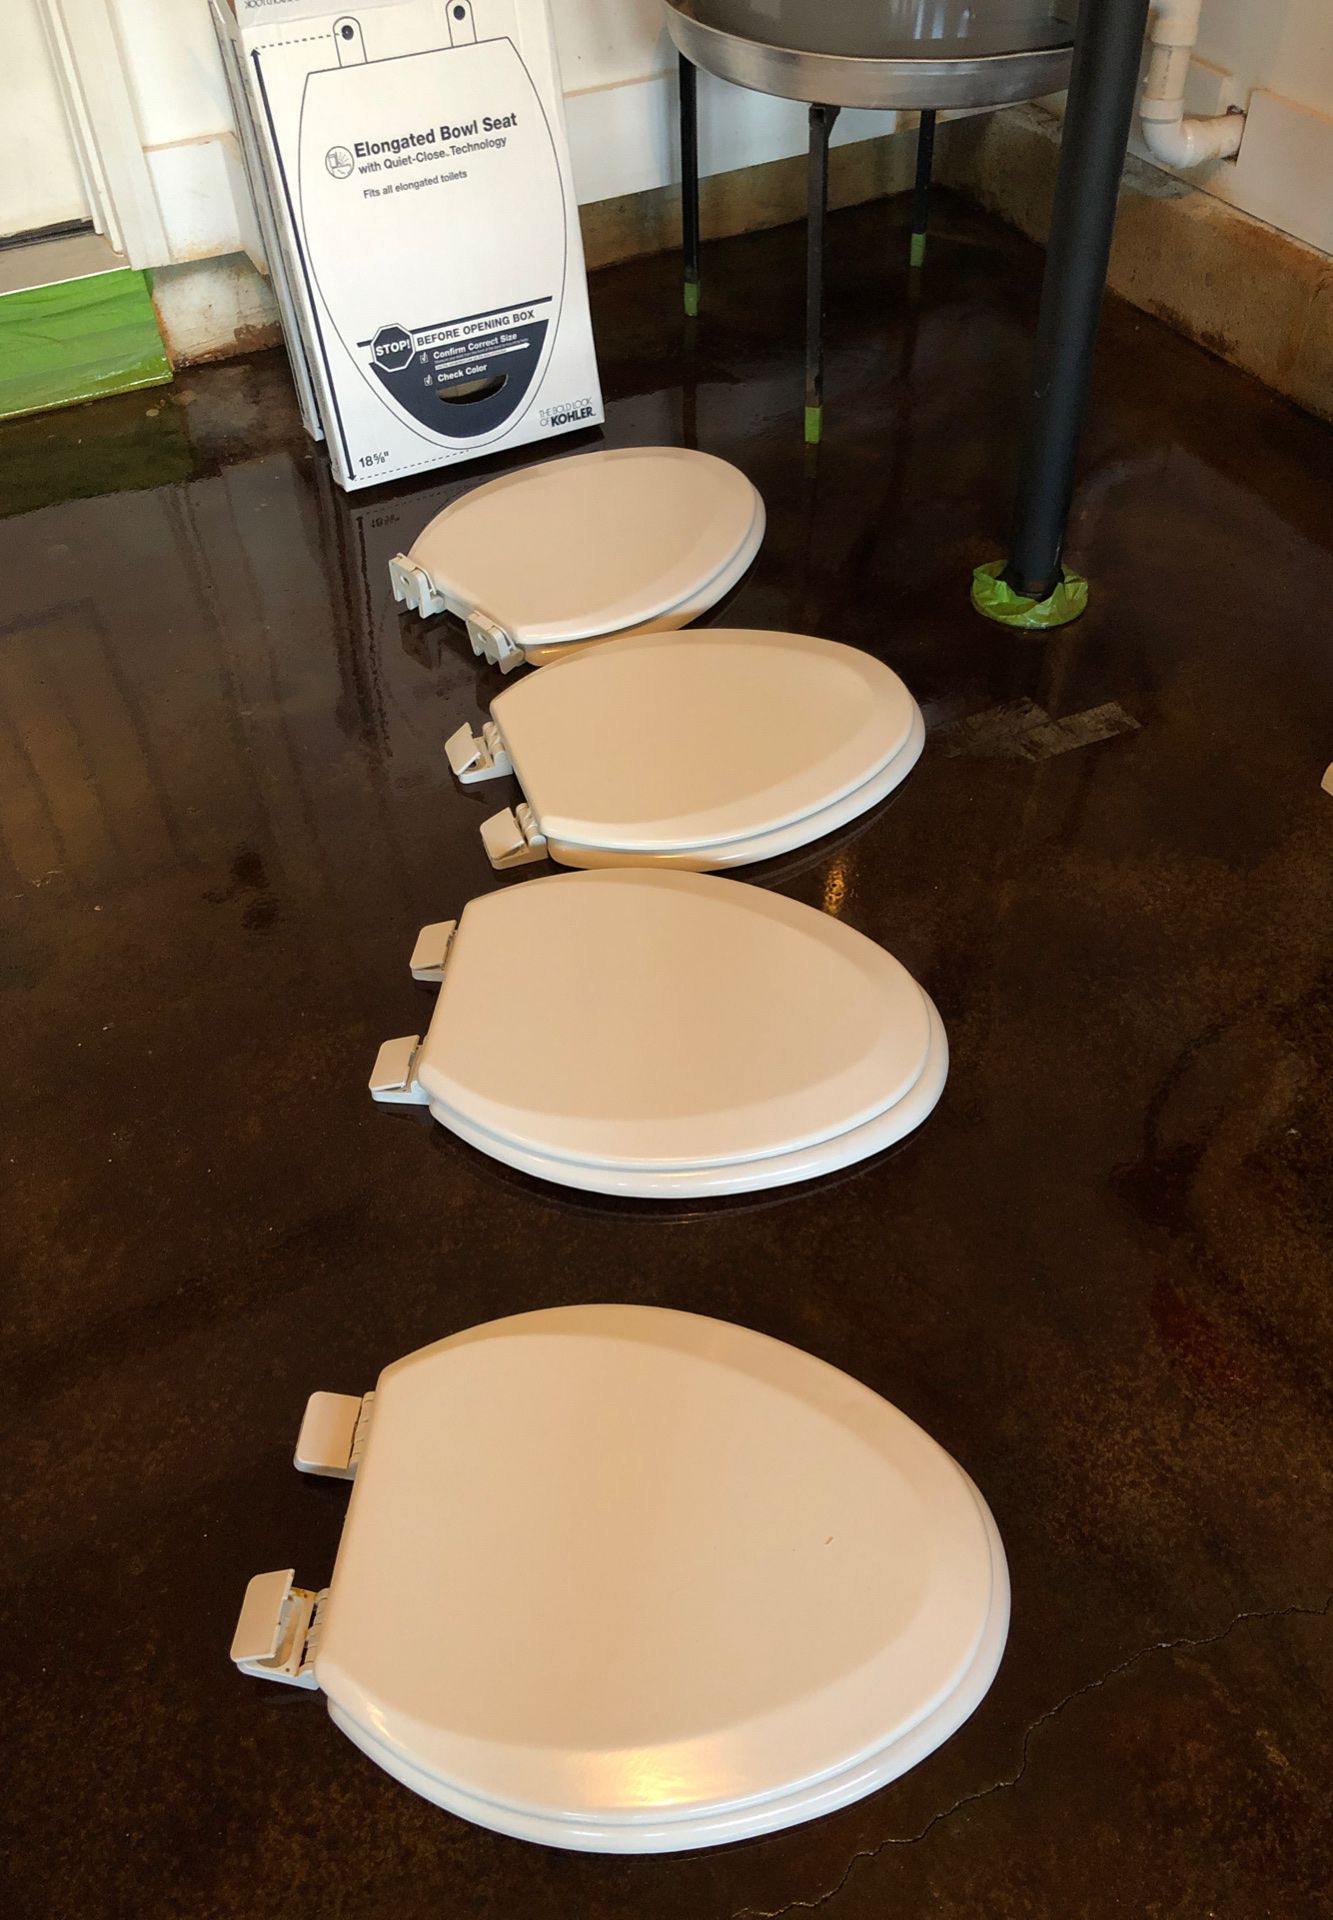 4 white elongated toilet bowl seats